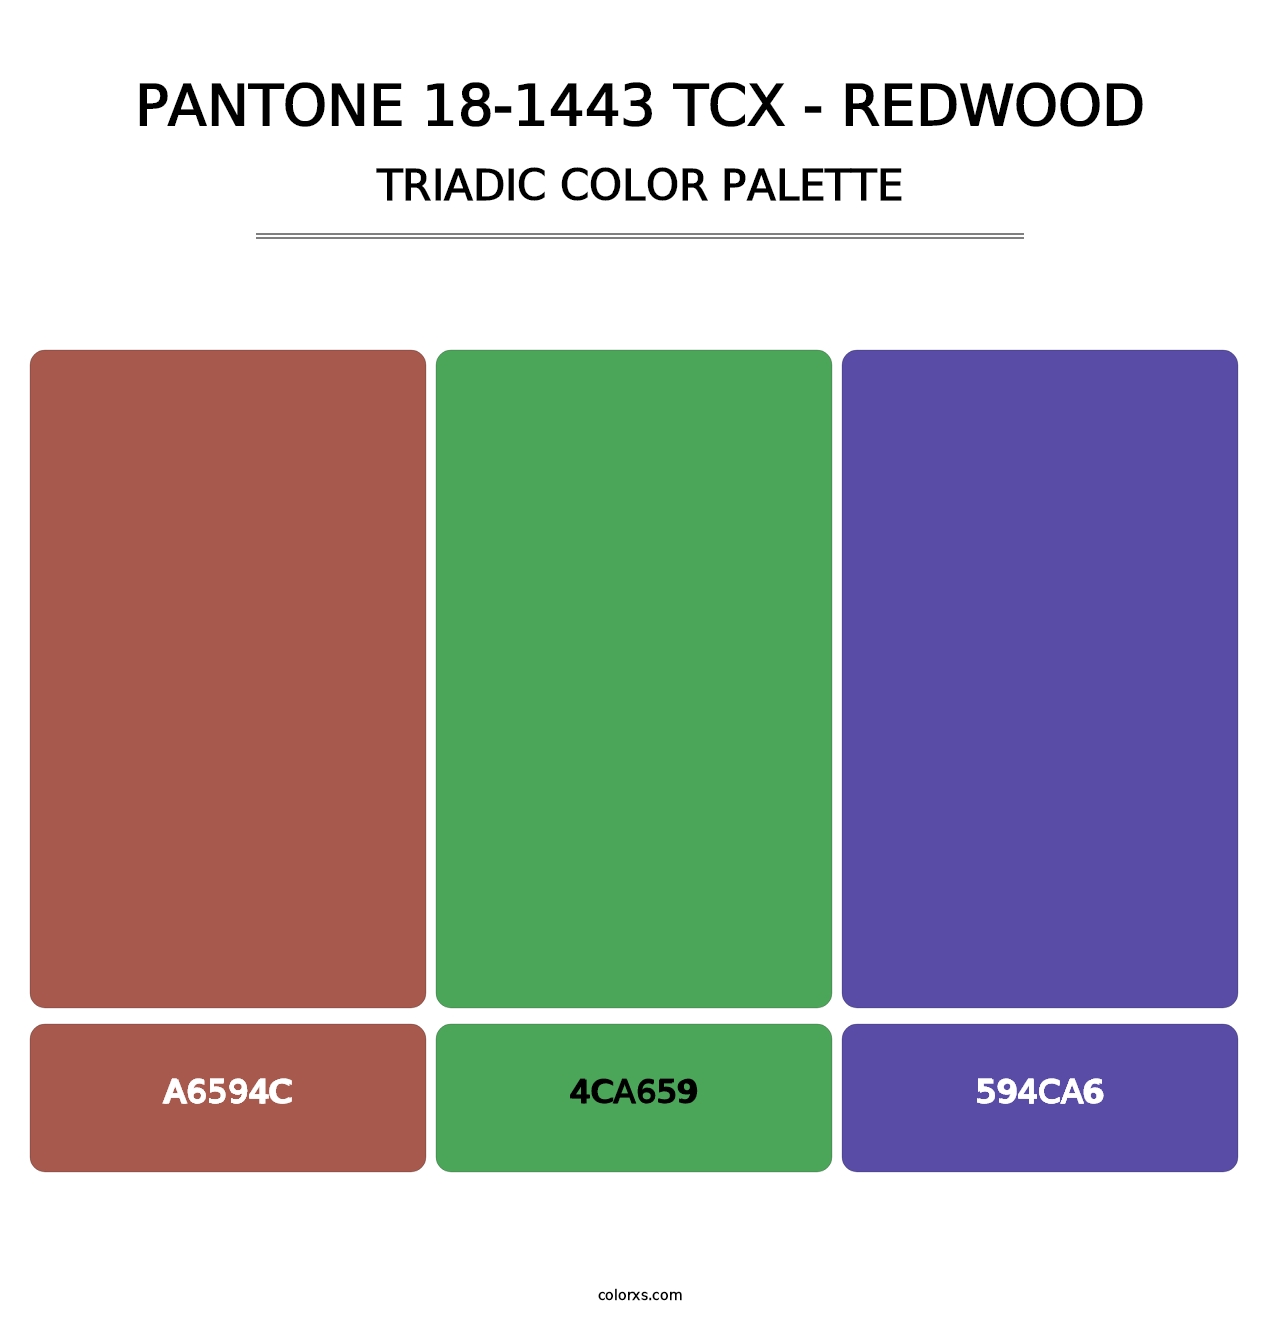 PANTONE 18-1443 TCX - Redwood - Triadic Color Palette